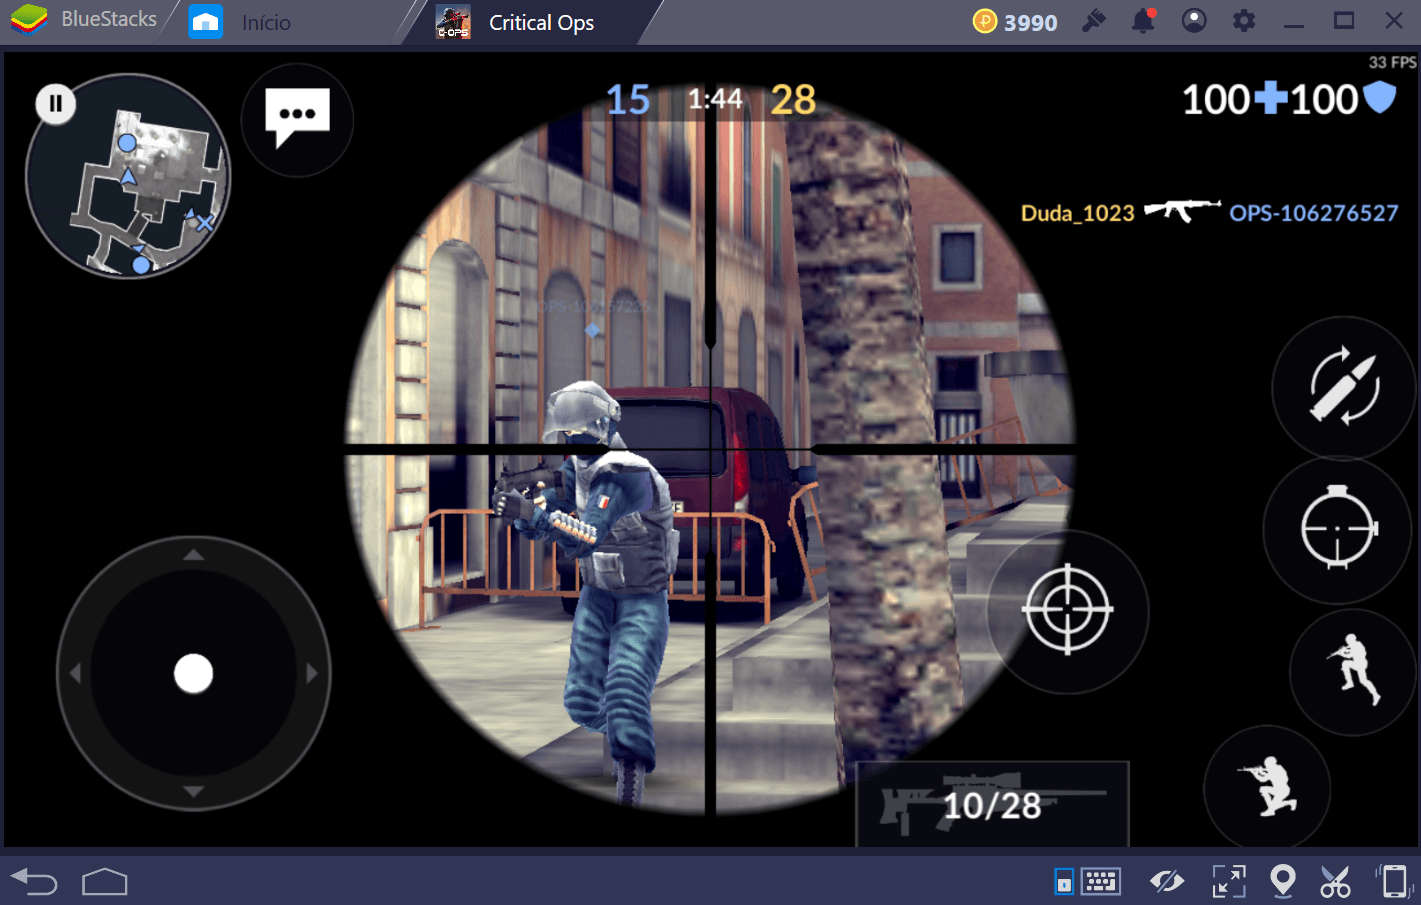 Guia para sniper em Critical Ops